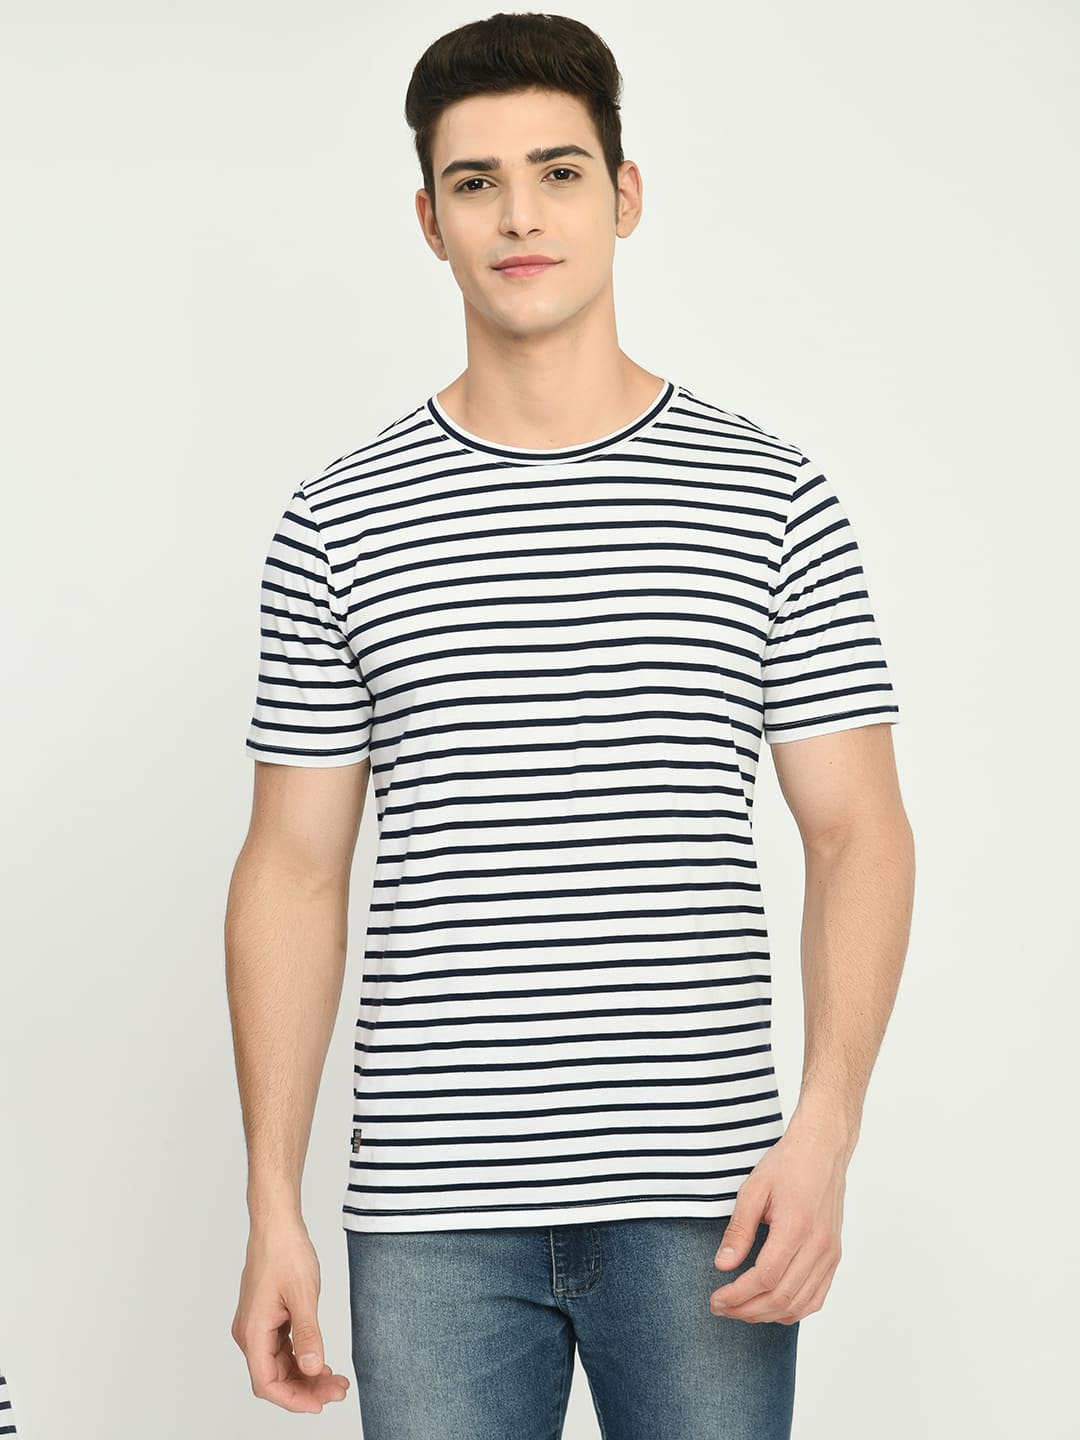 Men's Navy White Striped Round Neck T-Shirt